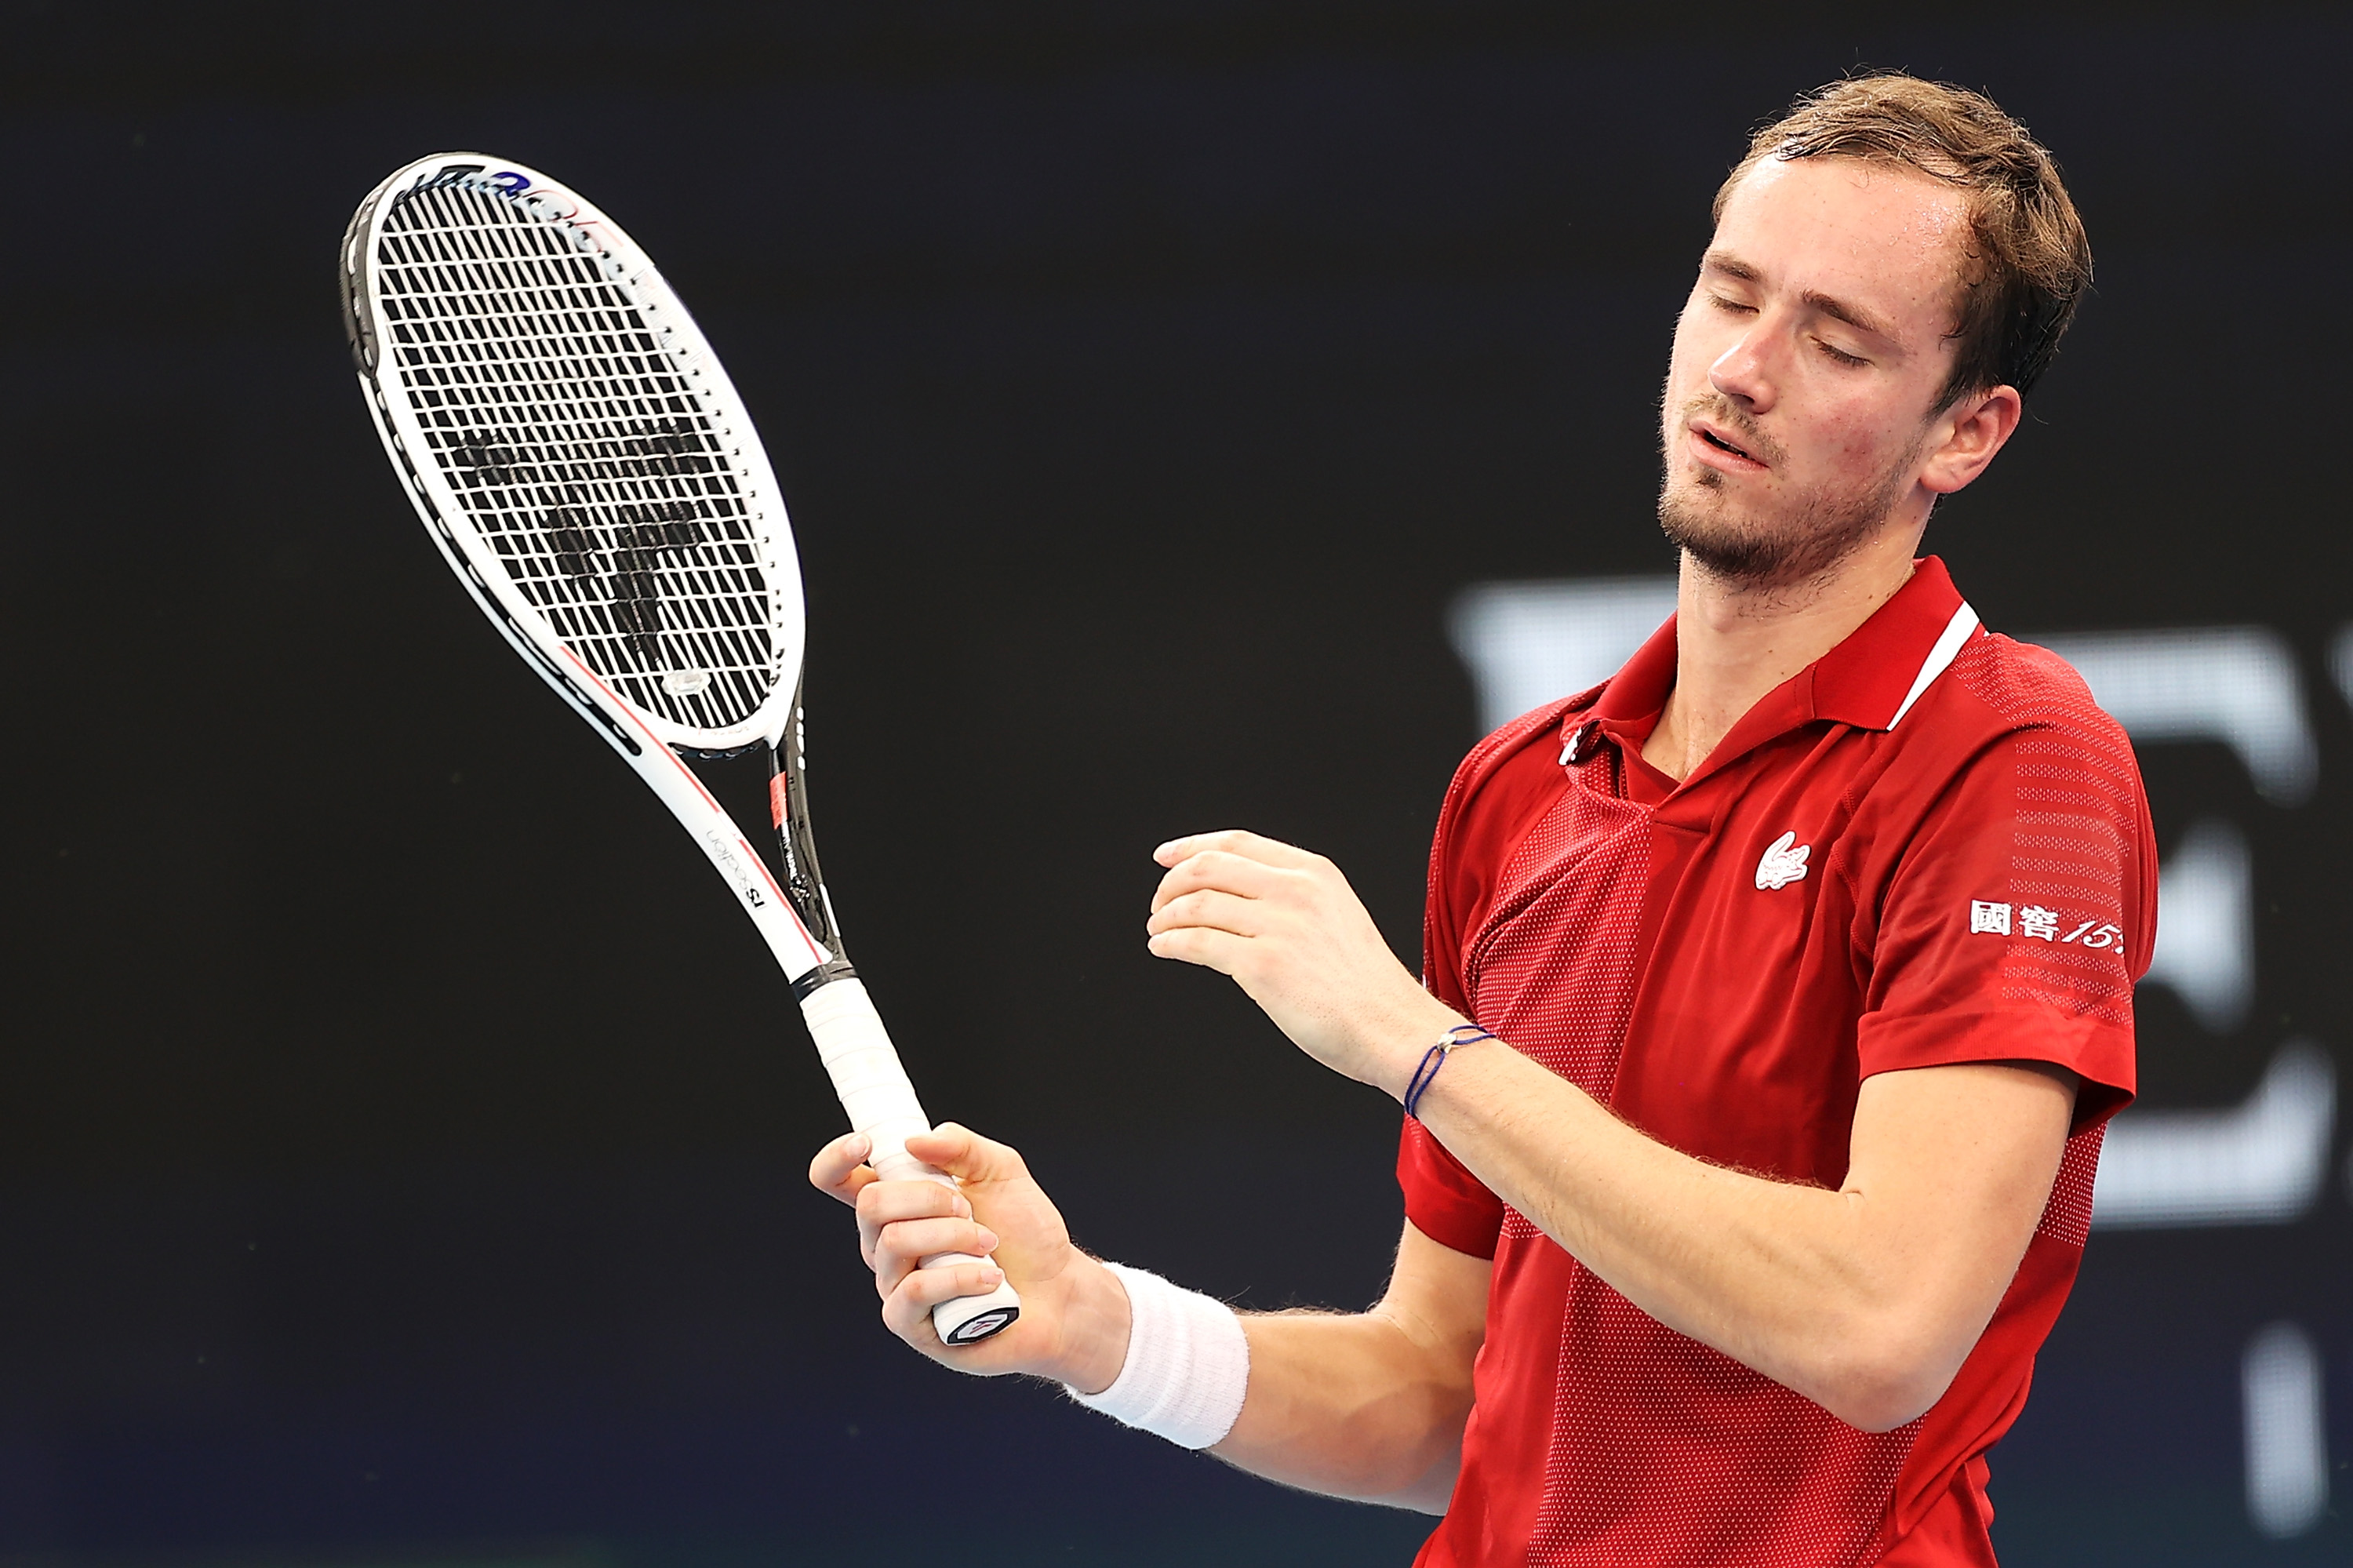 Tennis news: Australian Open Daniil Medvedev upset by world No.35 Ugo Humbert in Cup clash